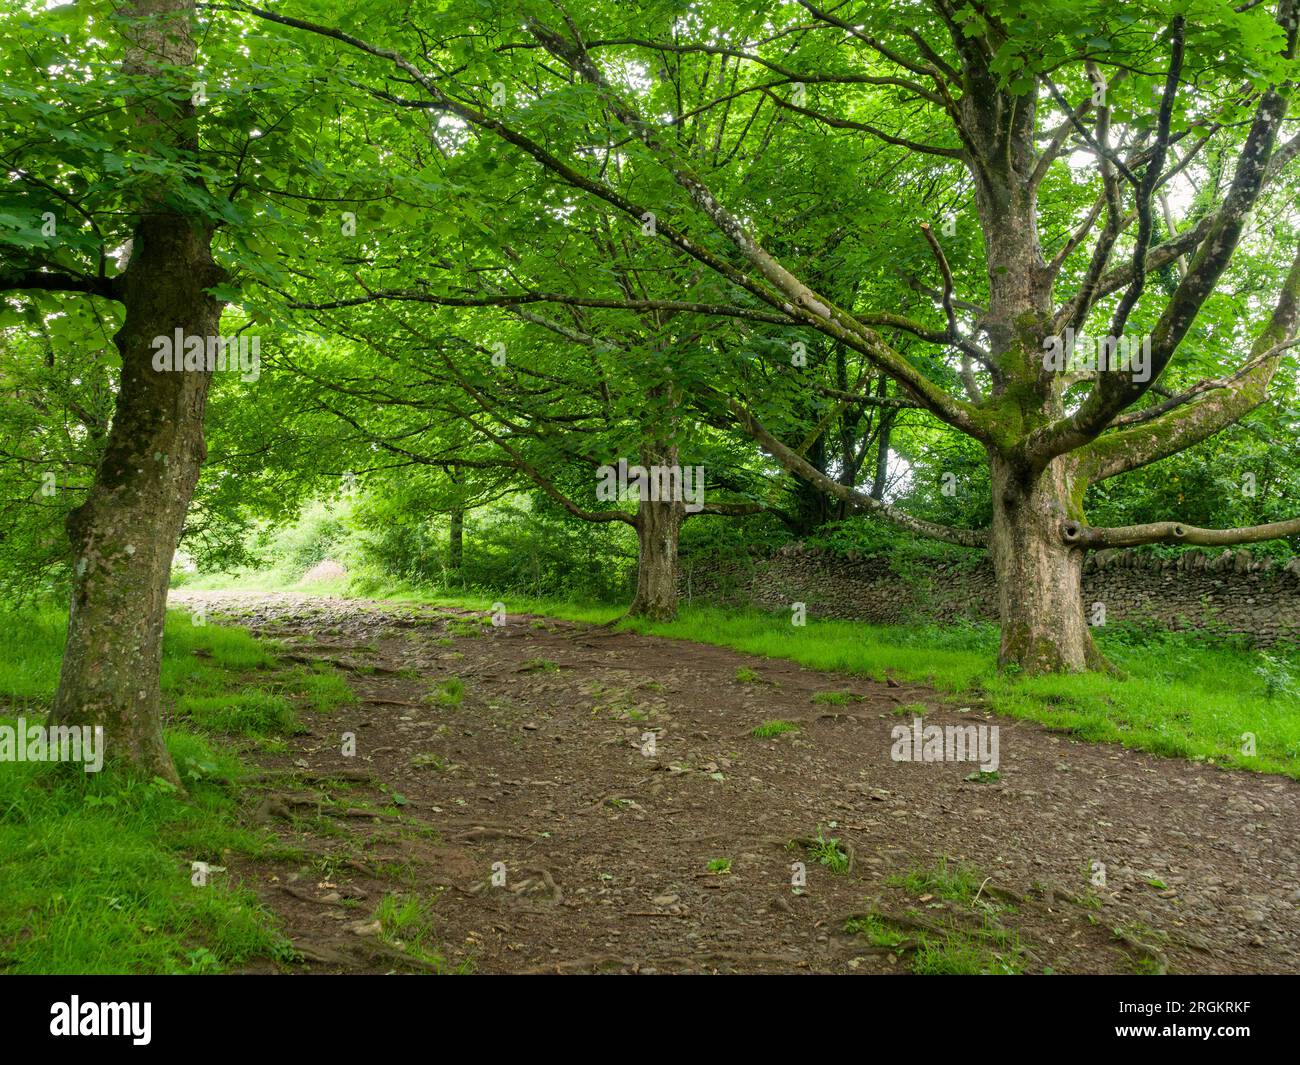 King's Wood, l'antico bosco di latifoglie nelle Mendip Hills vicino Axbridge, Somerset, Inghilterra. Foto Stock